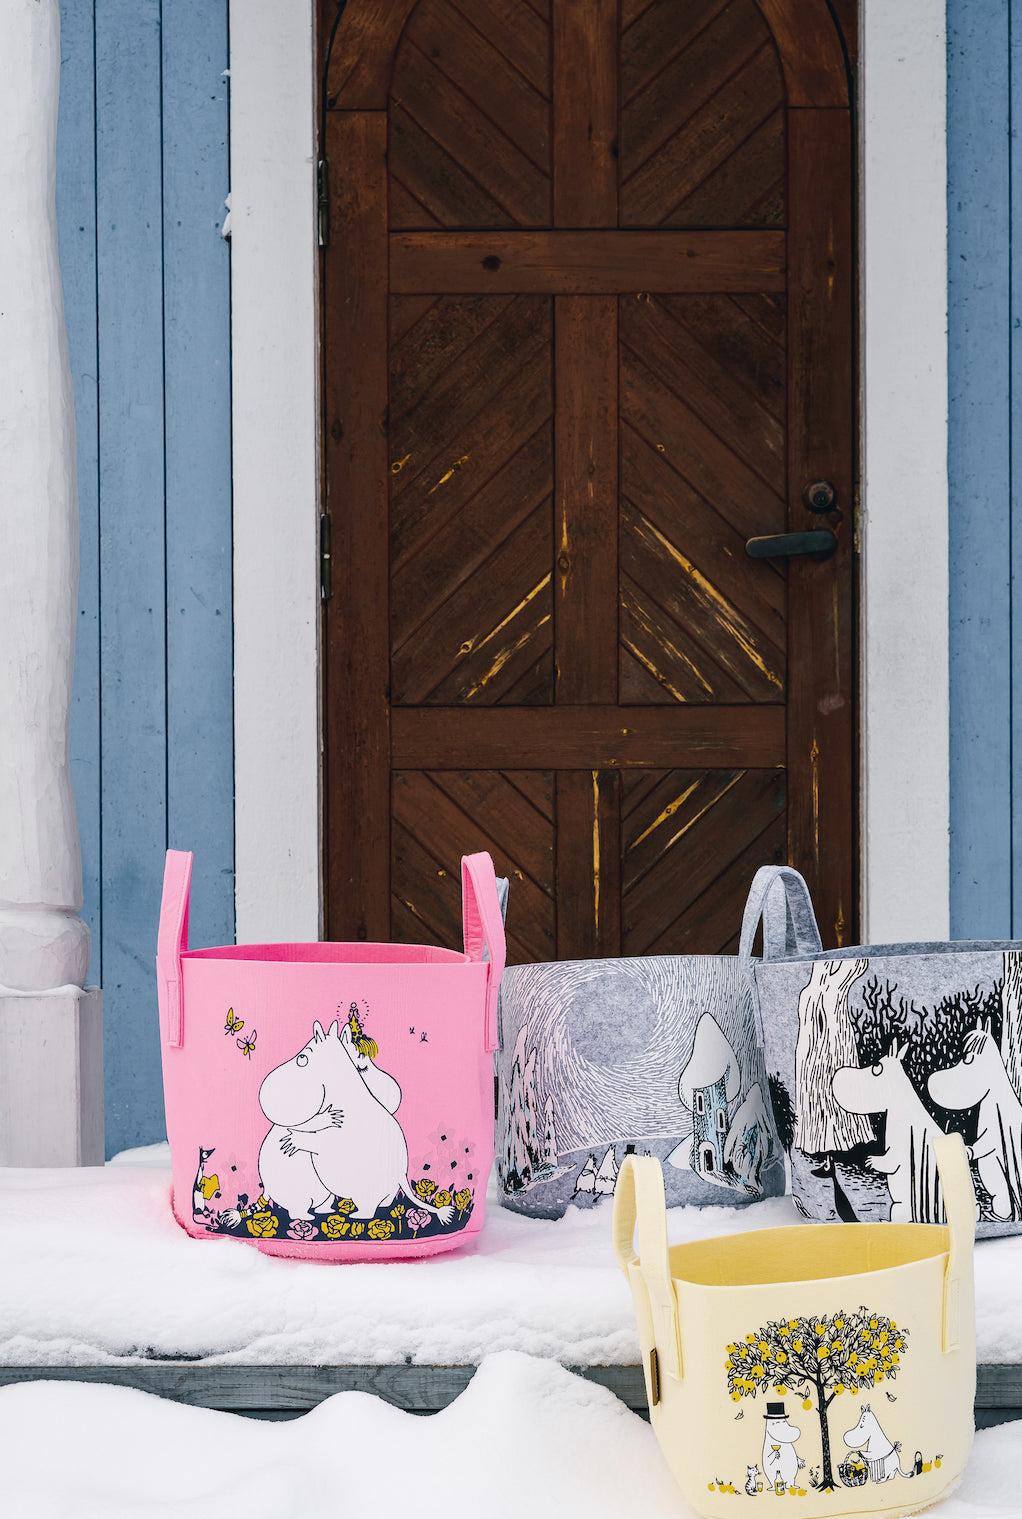 Muurla Design Storage Baskets in Moomin designs, outside in the snow